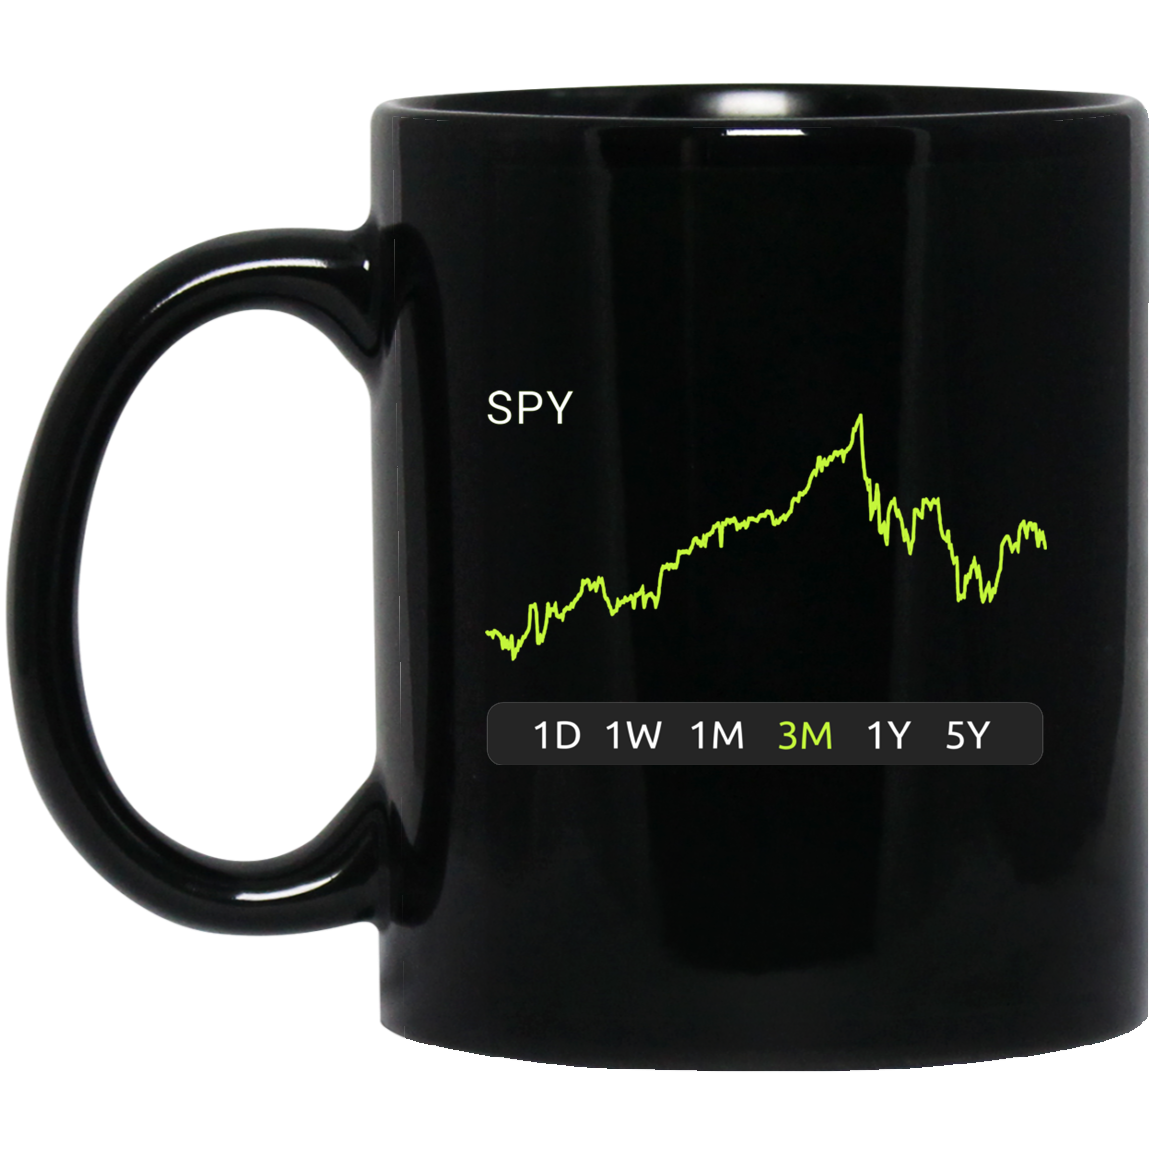 SPY Stock 3m Mug